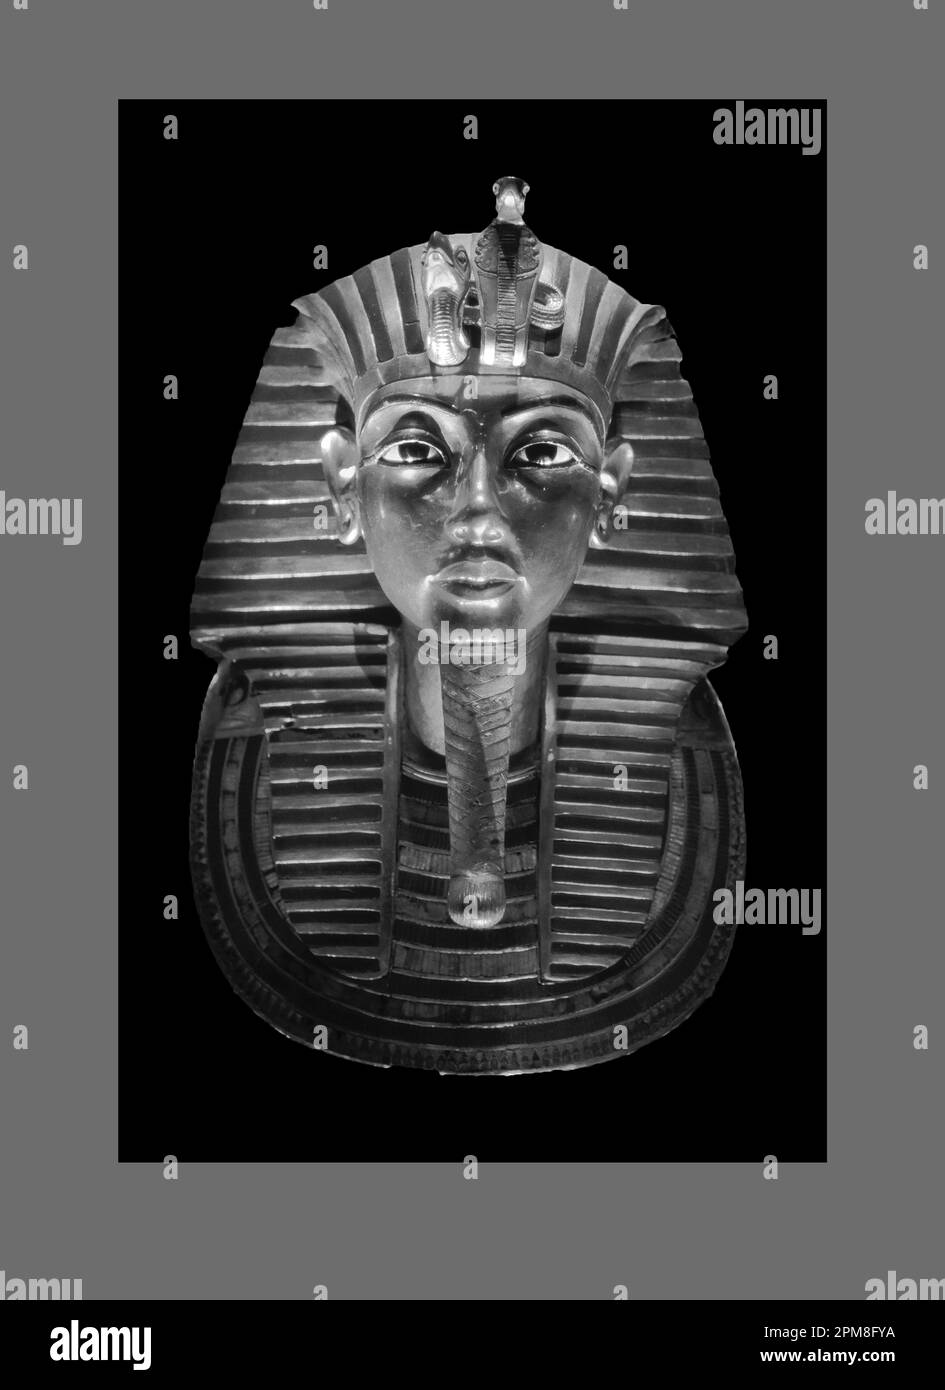 Egypt, Cairo. Egyptian museum. The golden funerary mask, death mask of Tutankhamun. Black & White image. Stock Photo